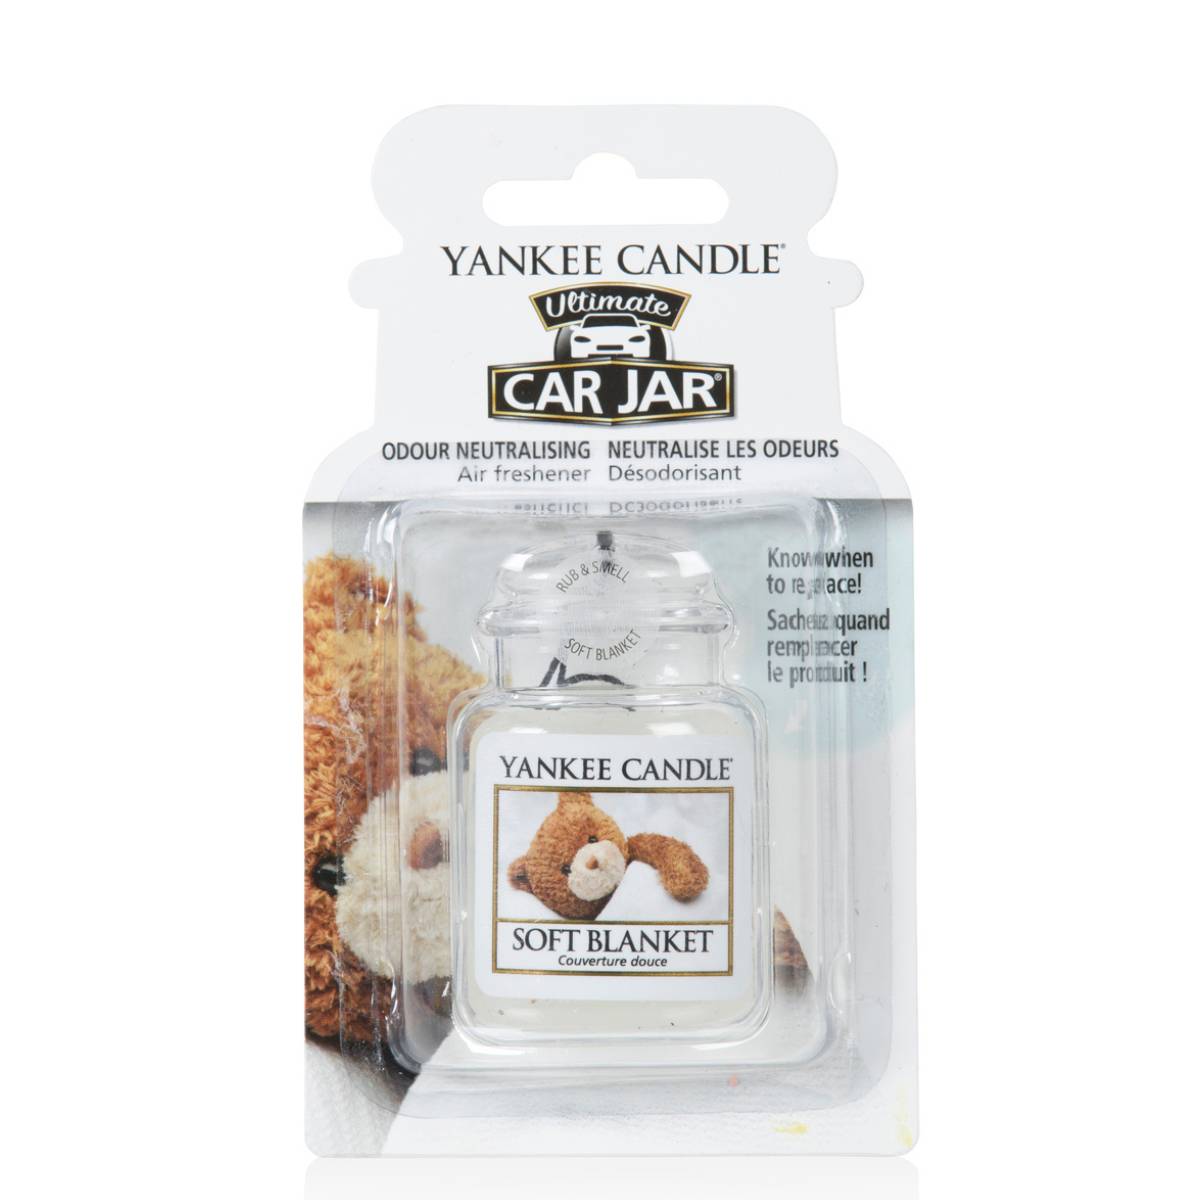 Soft Blanket - Car Jar®  Ultimate von Yankee Candle